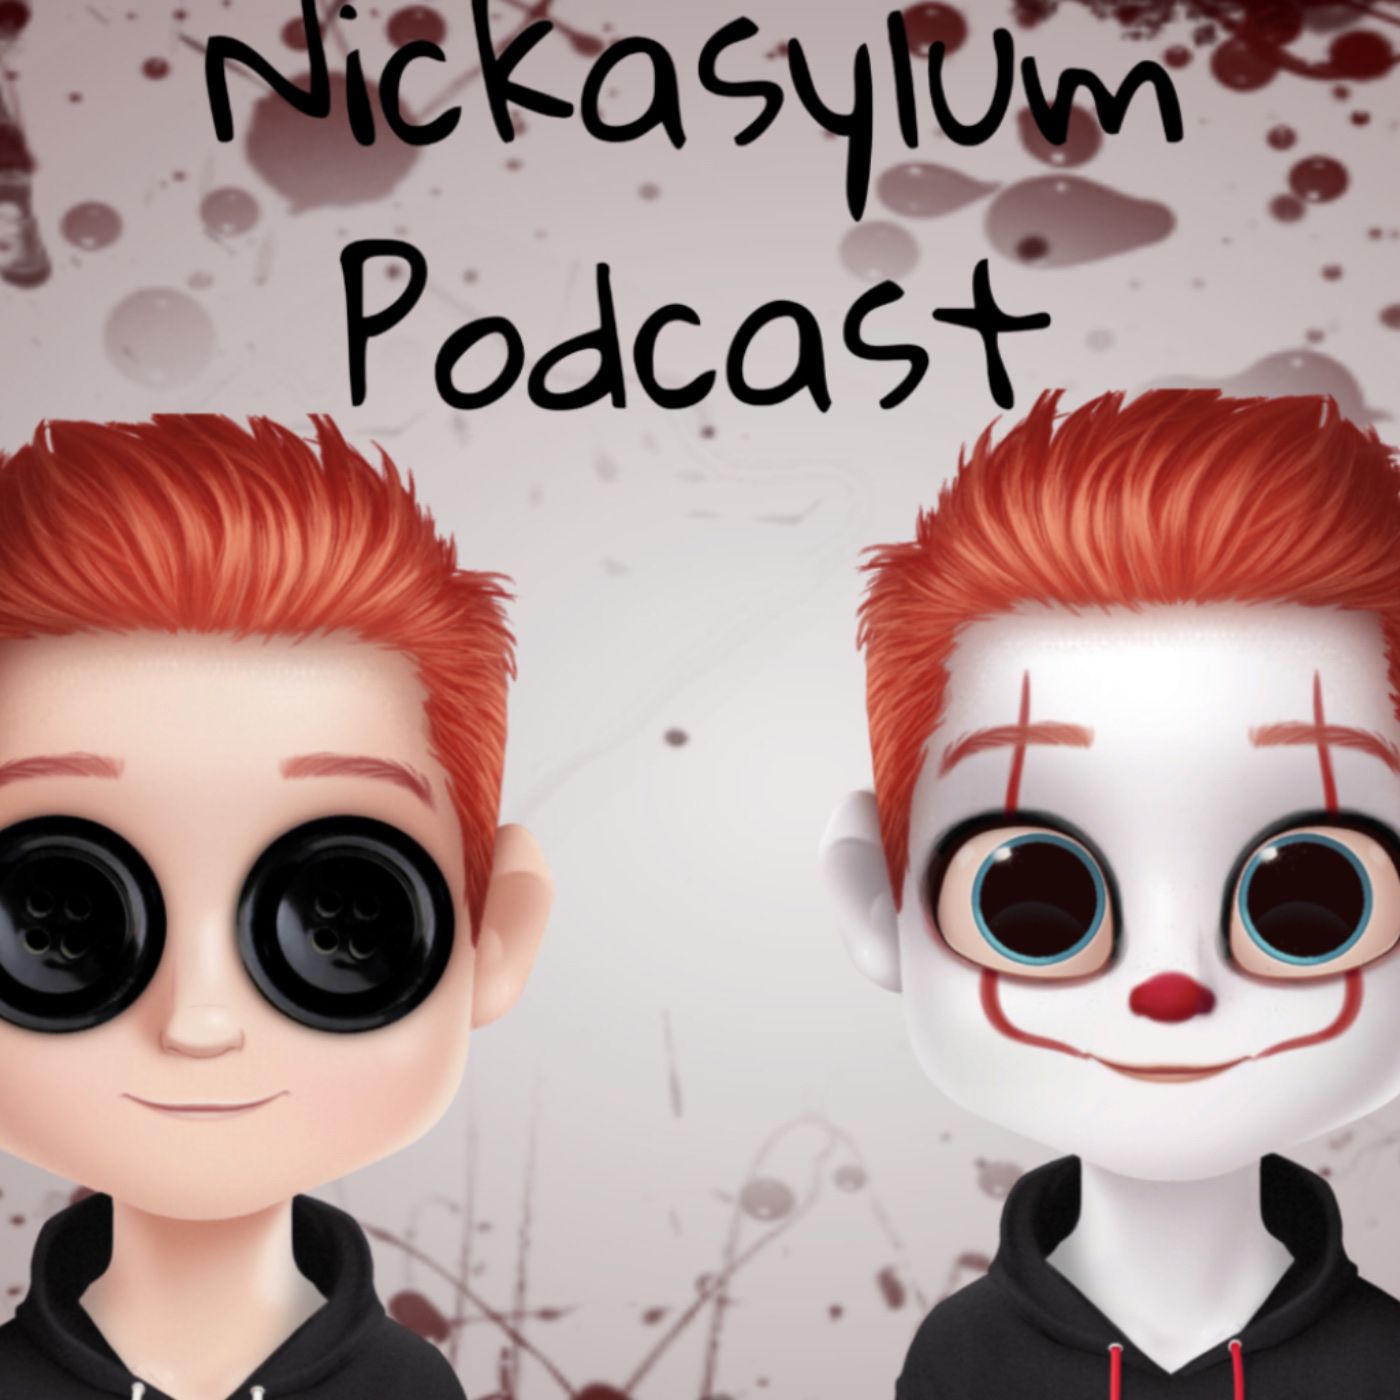 Nickasylum Podcast